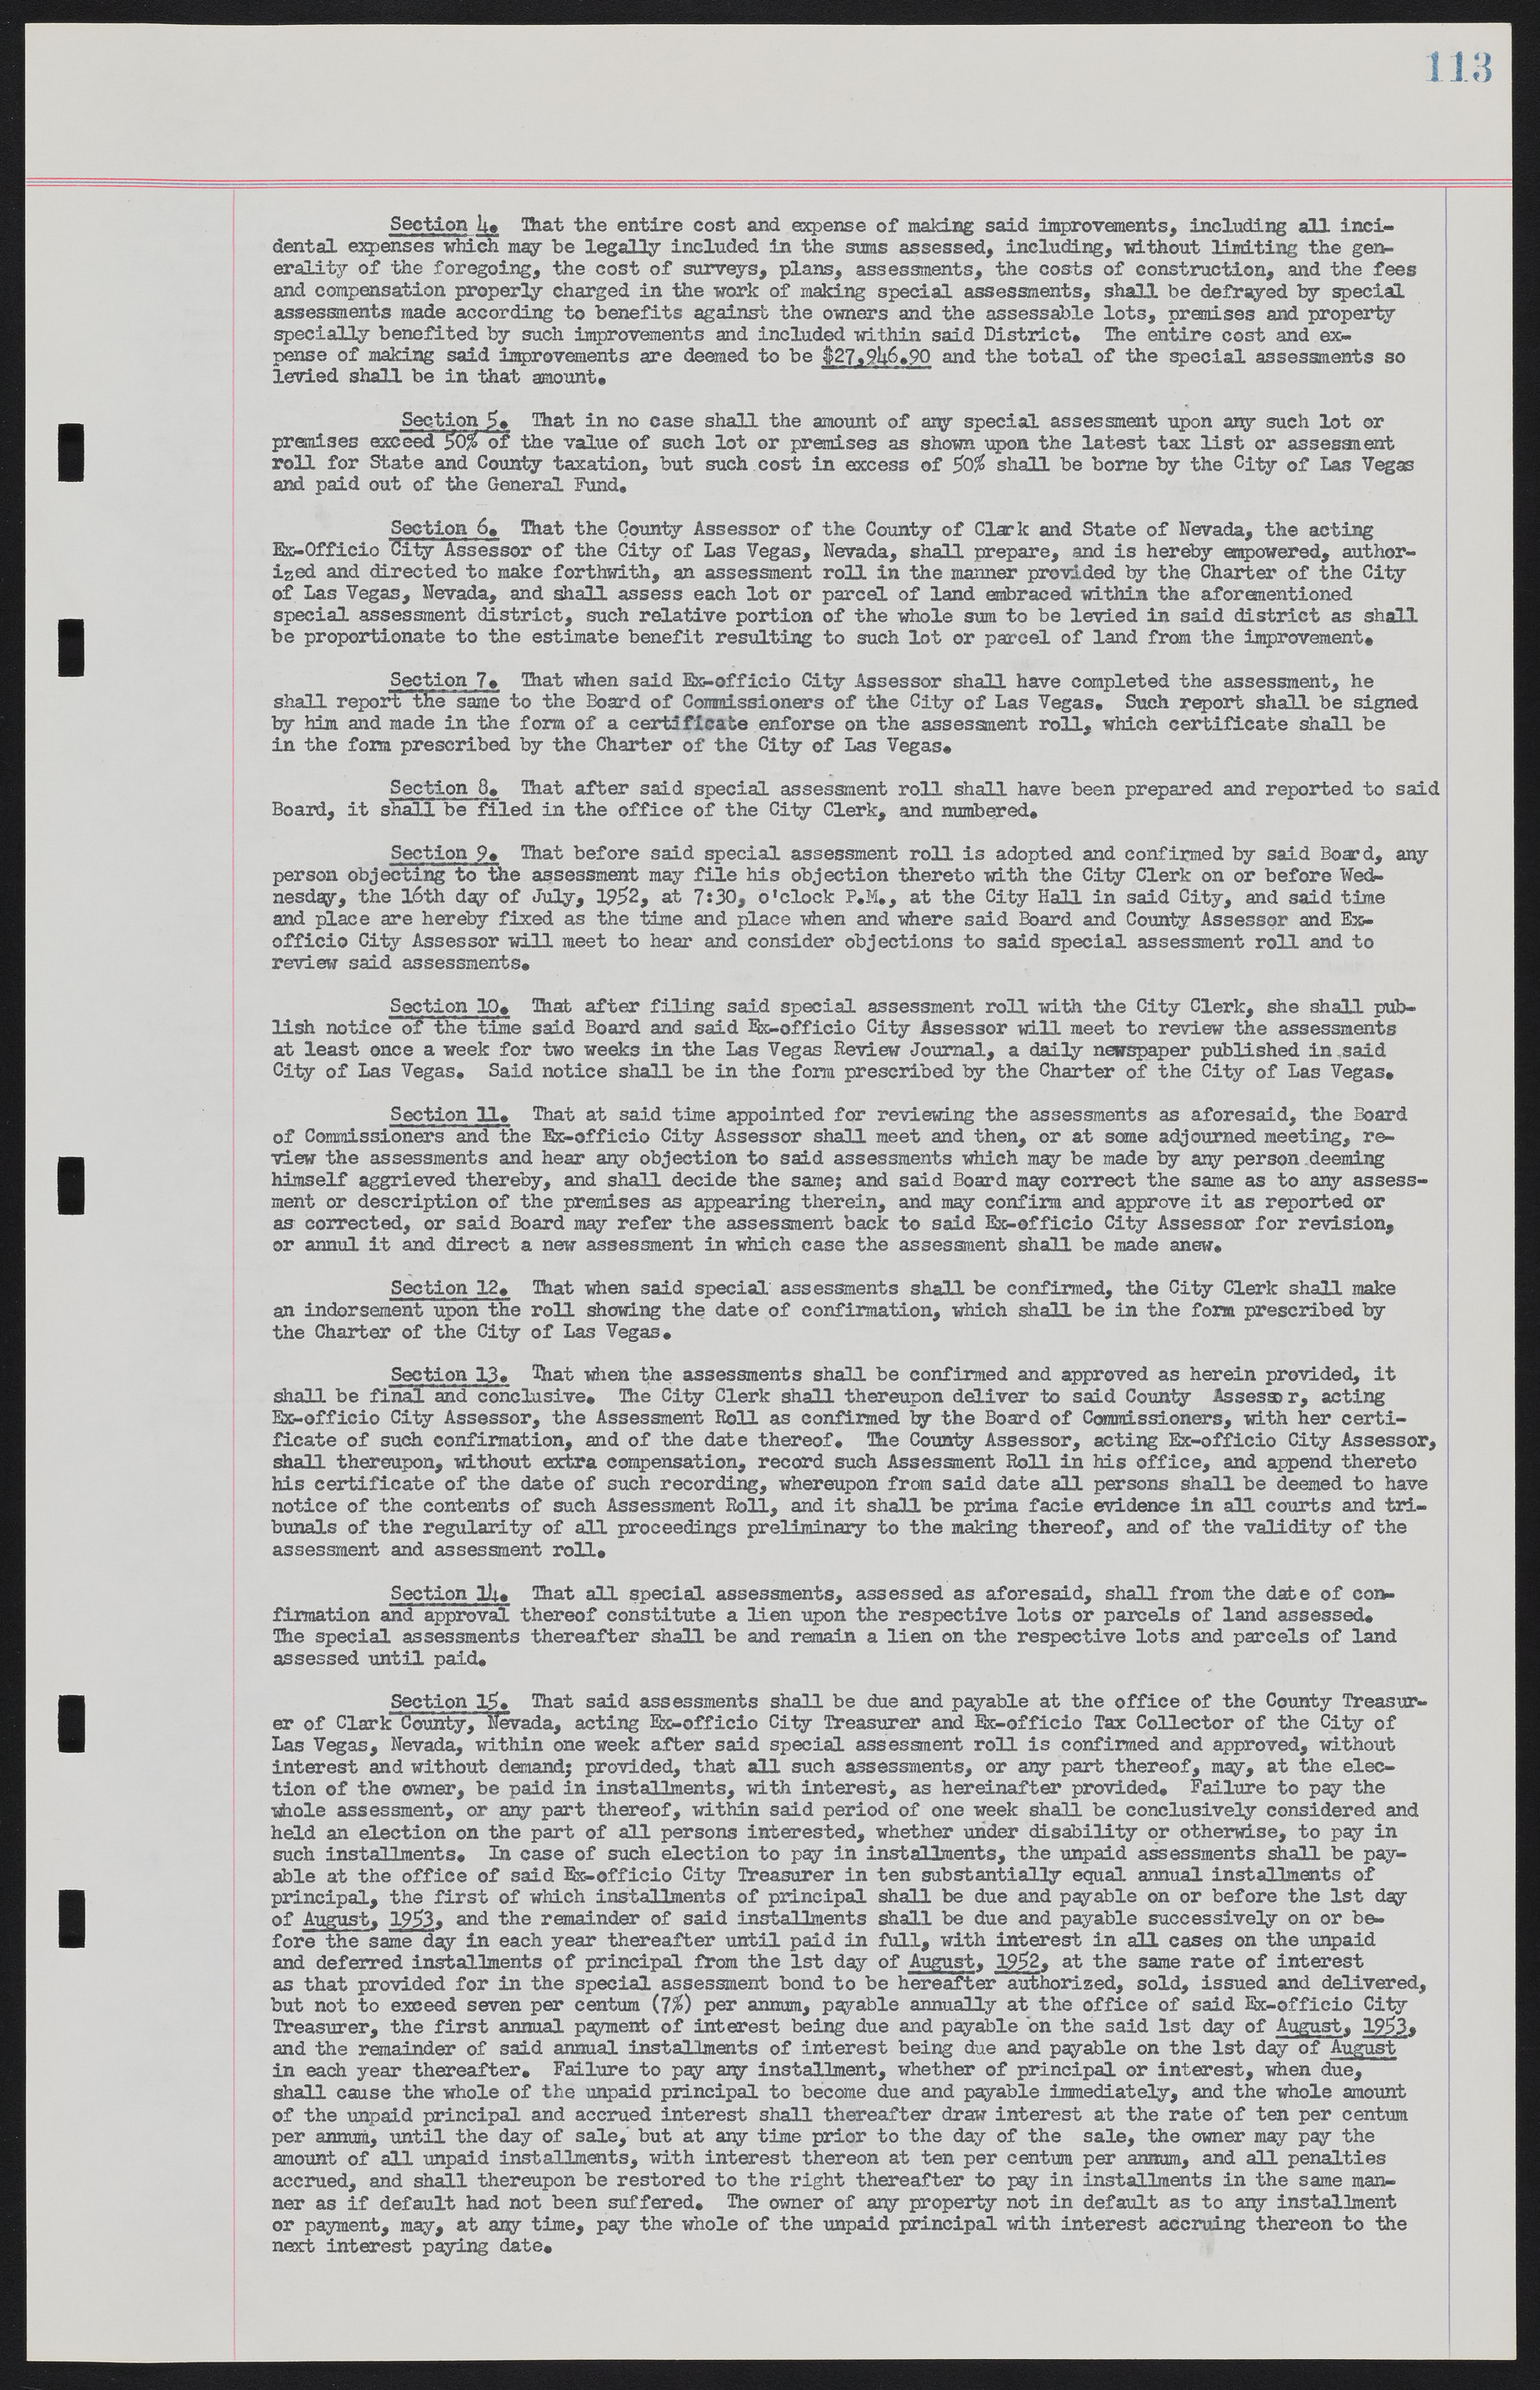 Las Vegas City Ordinances, November 13, 1950 to August 6, 1958, lvc000015-121